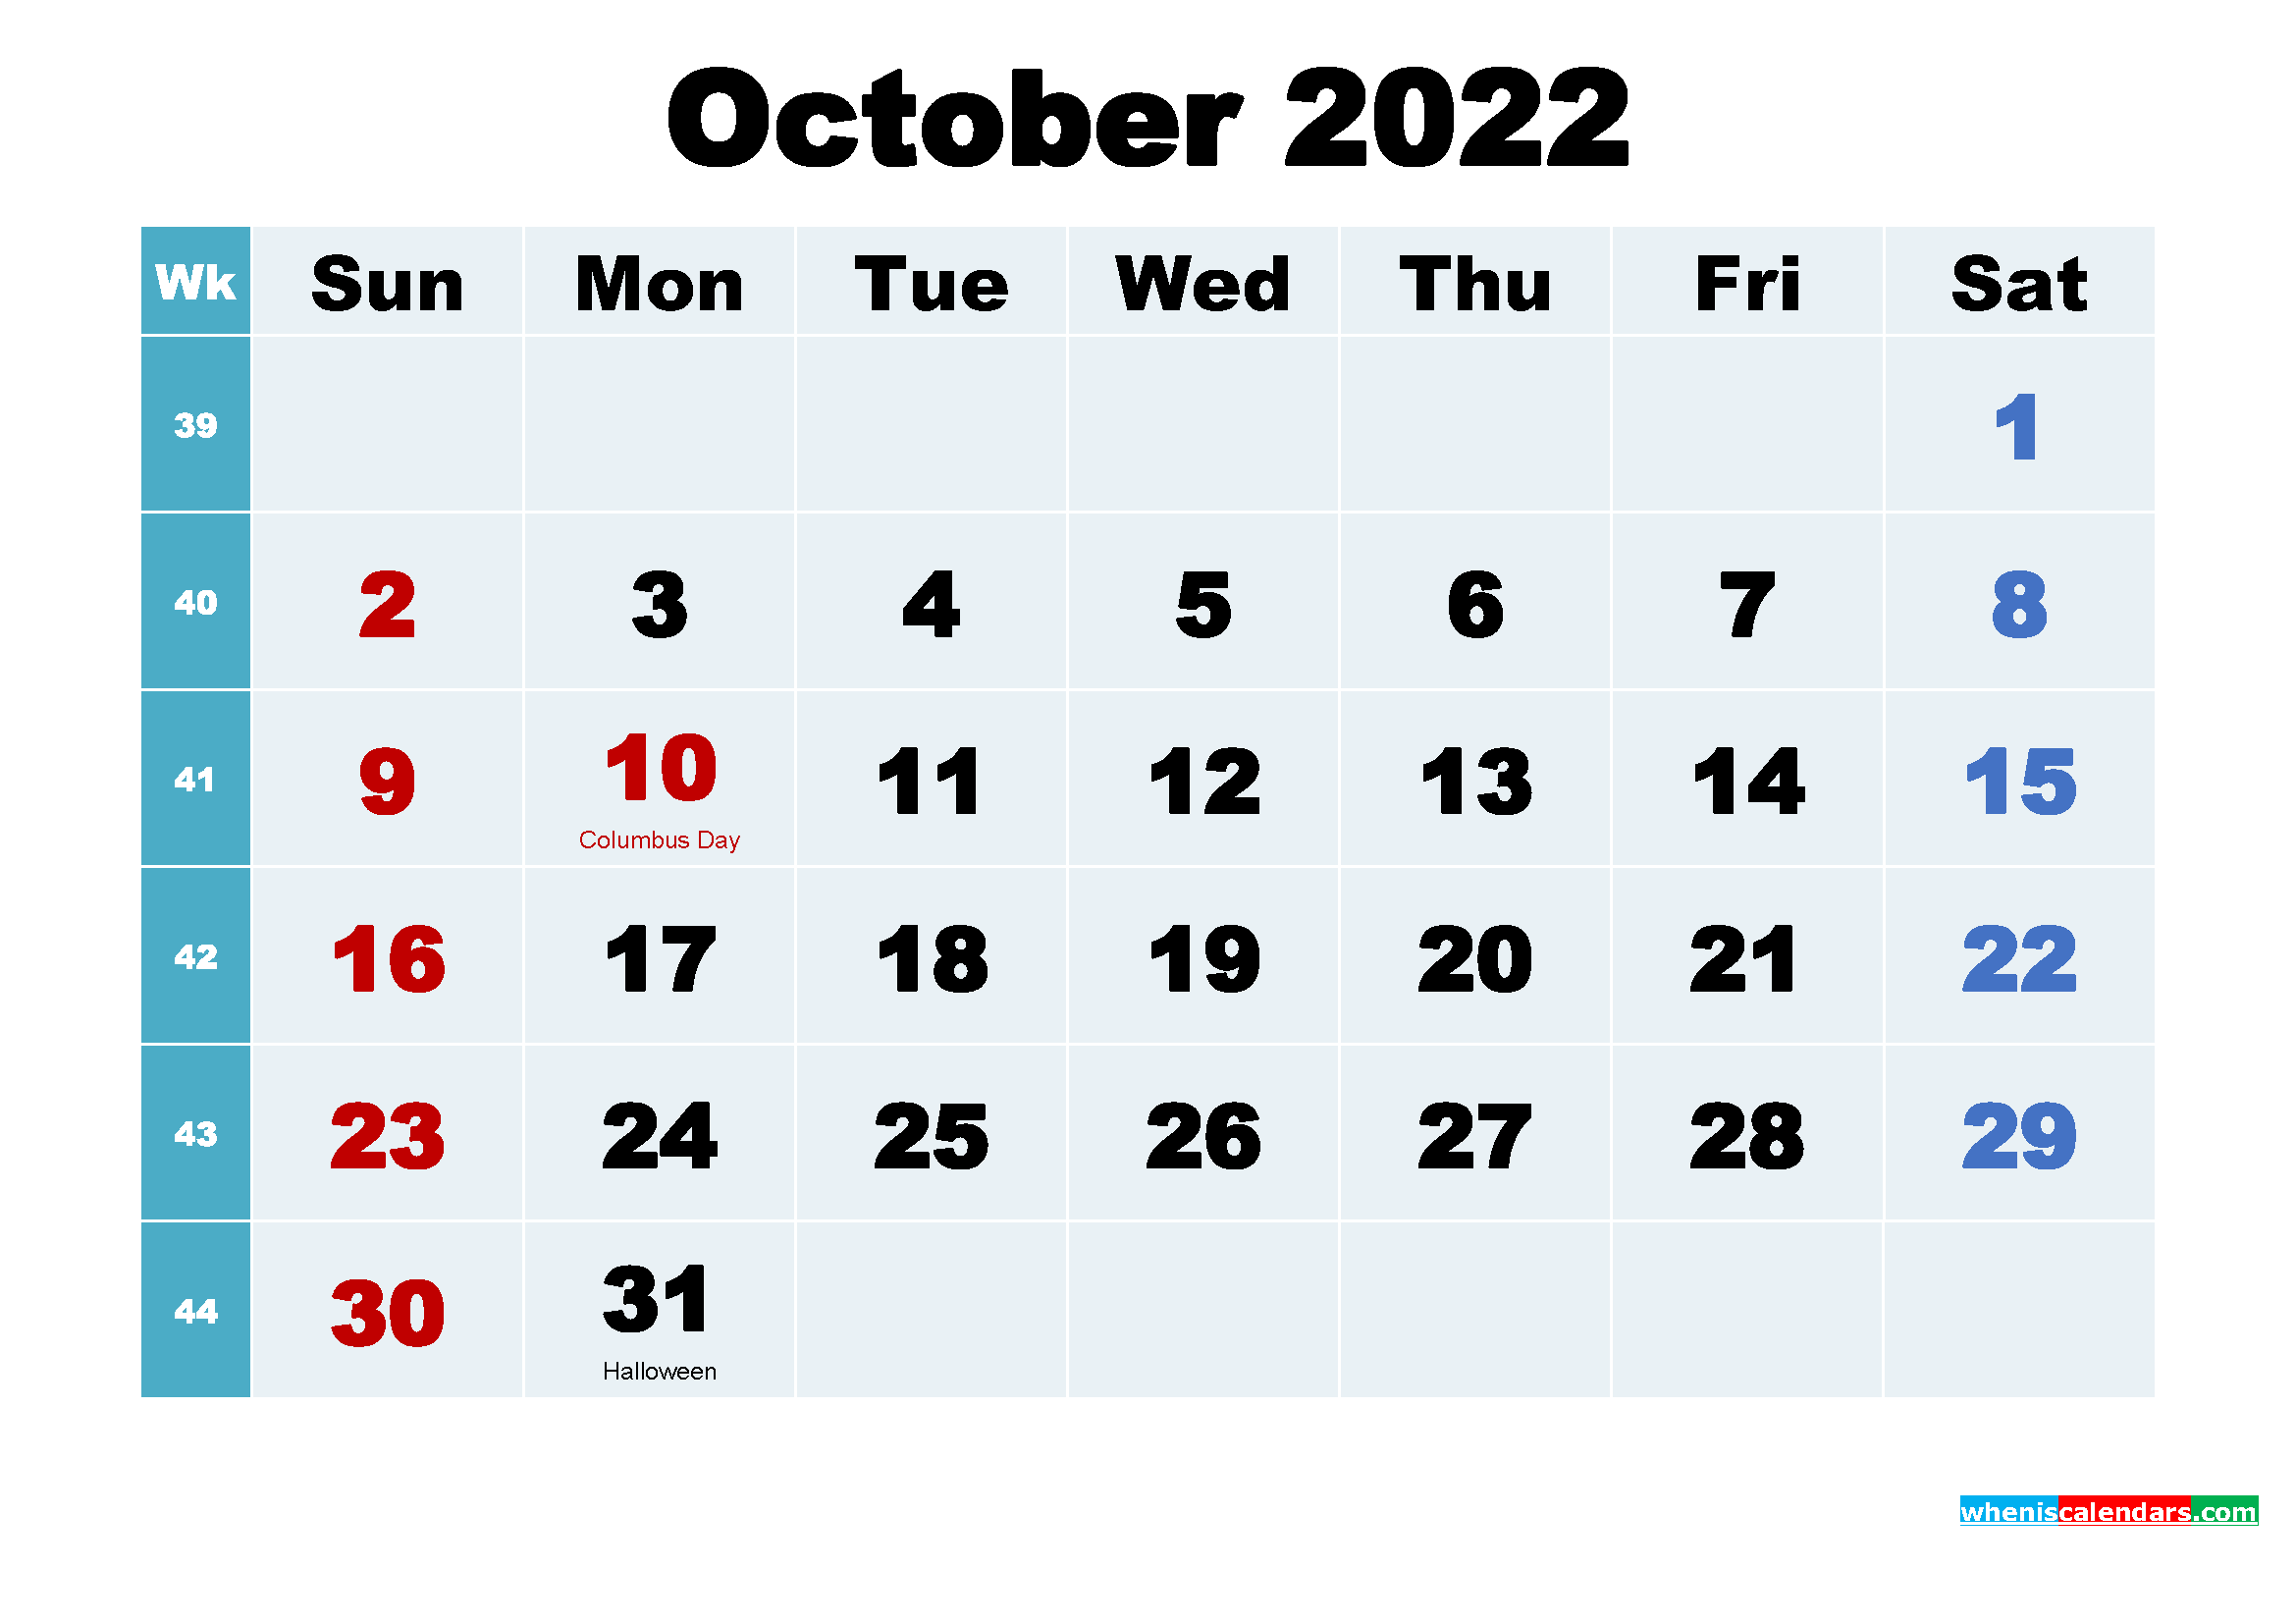 October 2022 Calendar Wallpaper Free Printable October 2022 Calendar Wallpaper